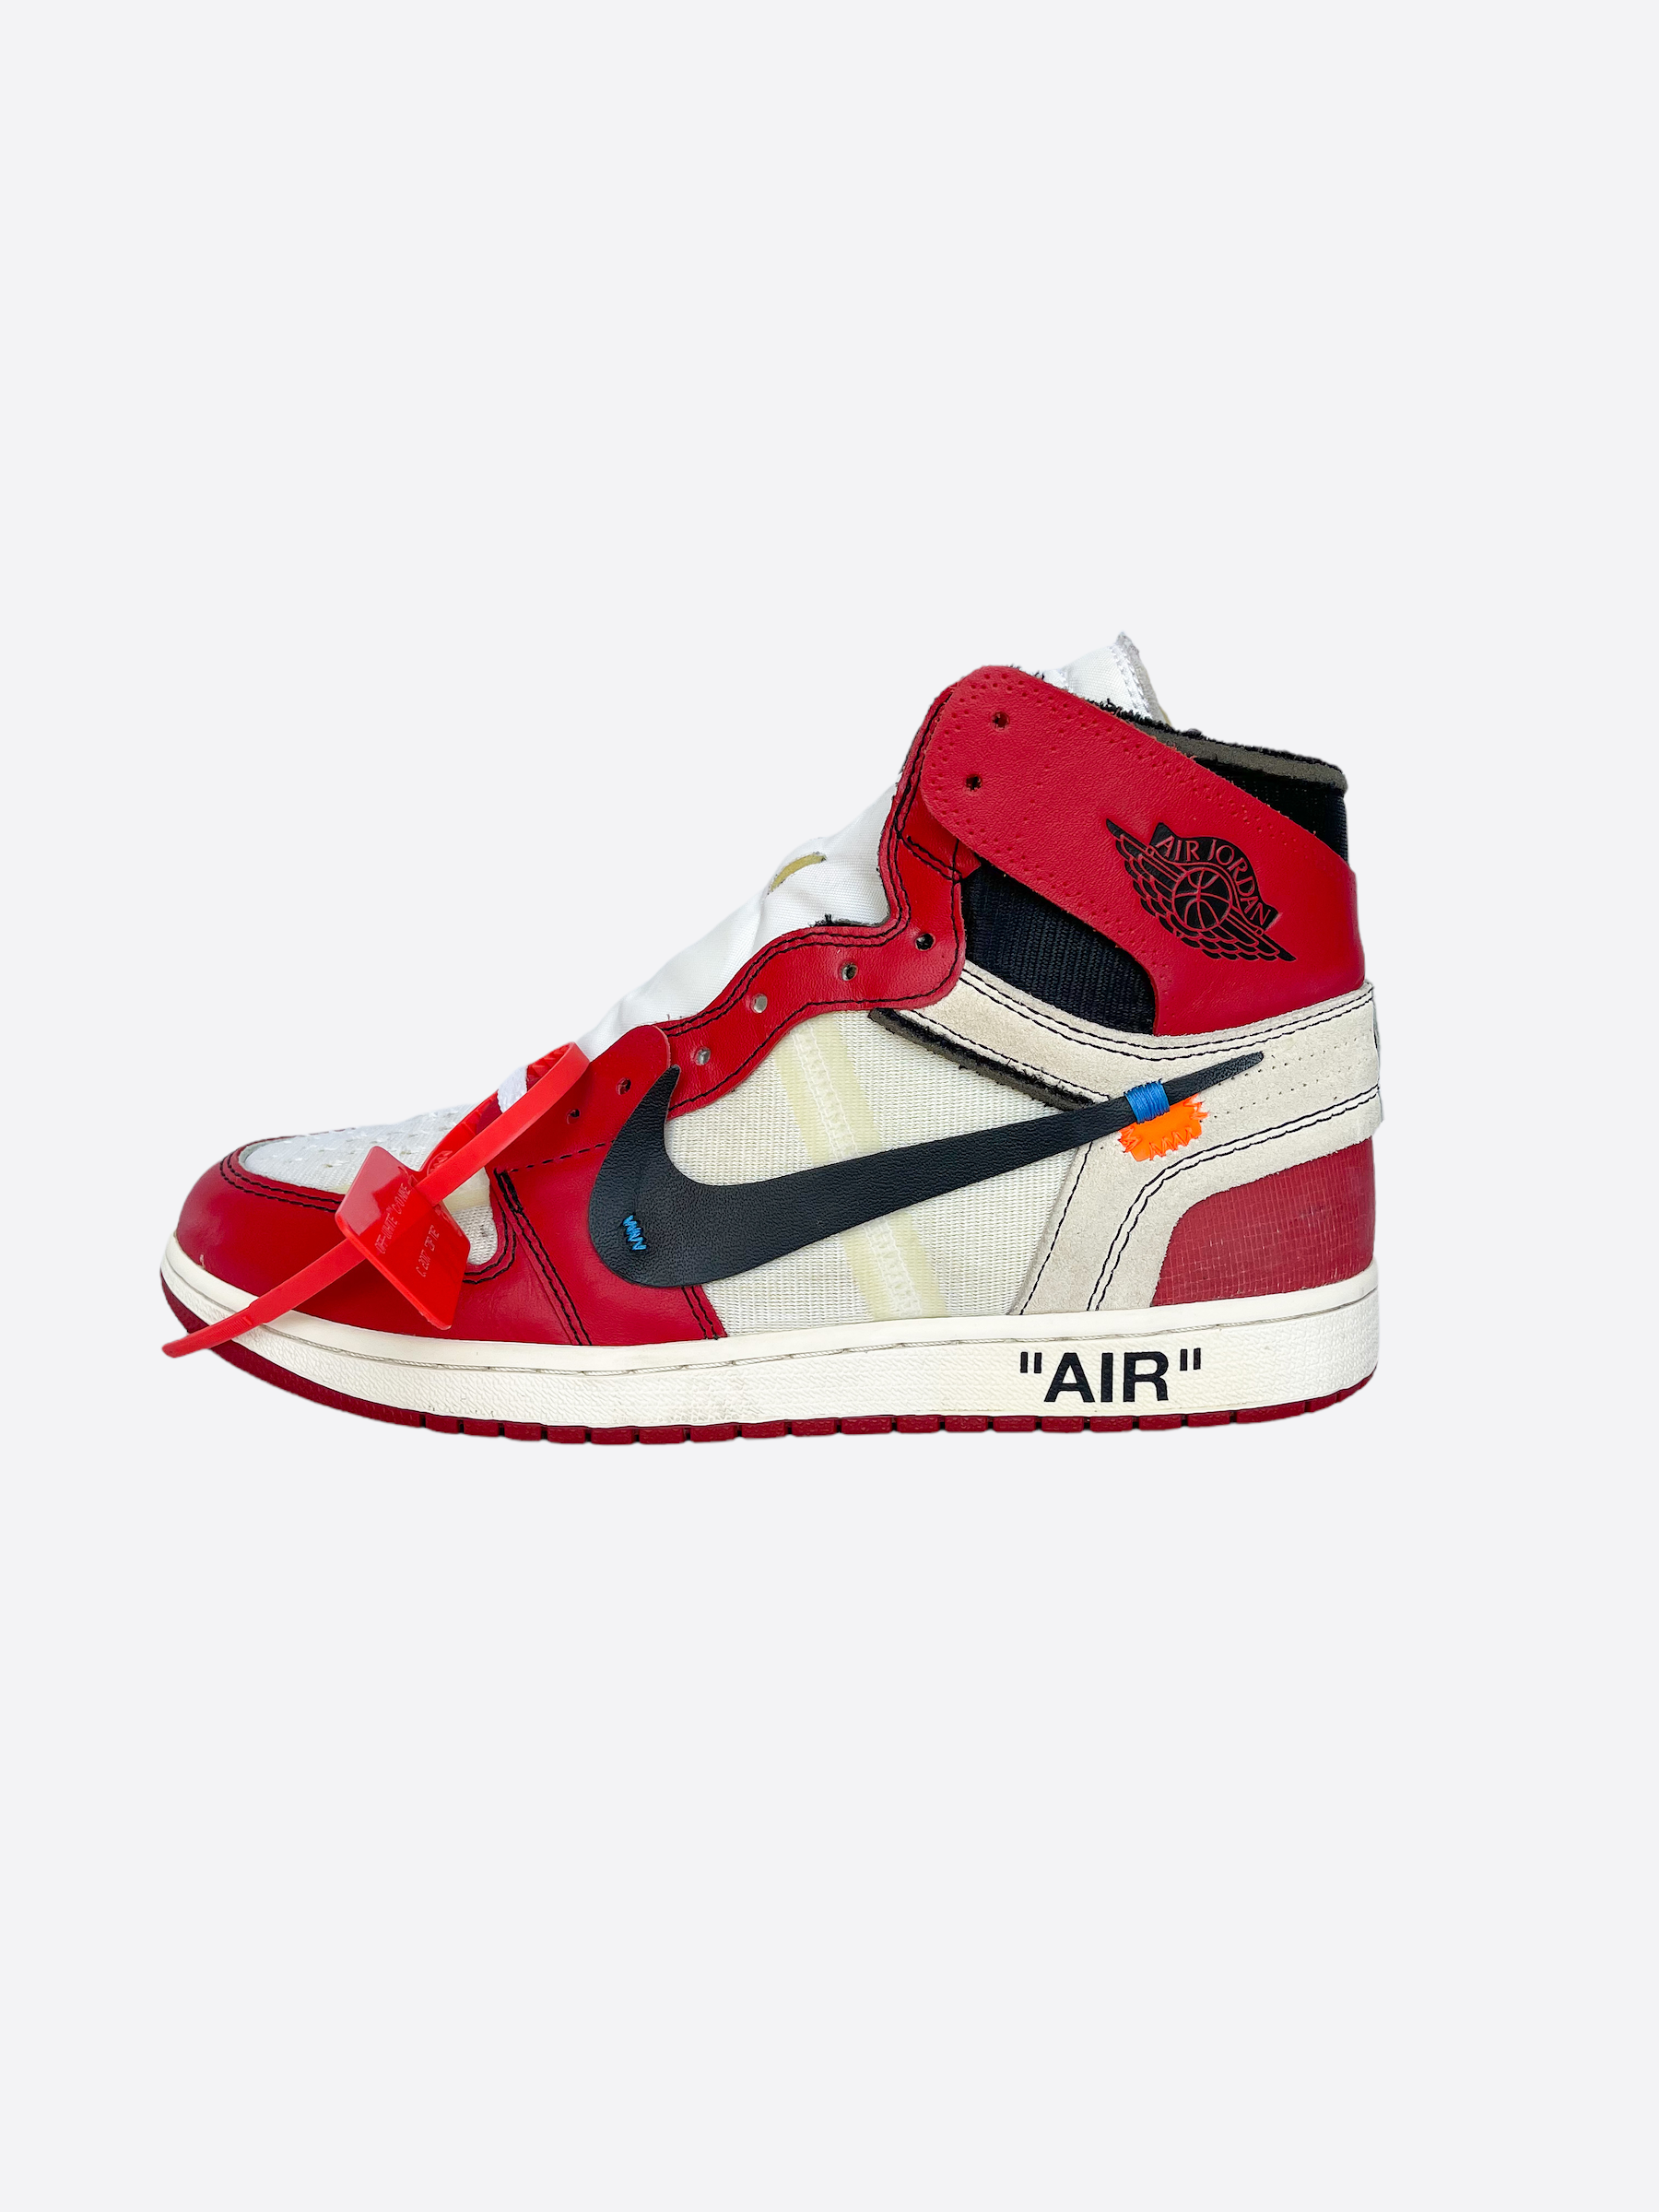 Air Jordan 1 Chicago